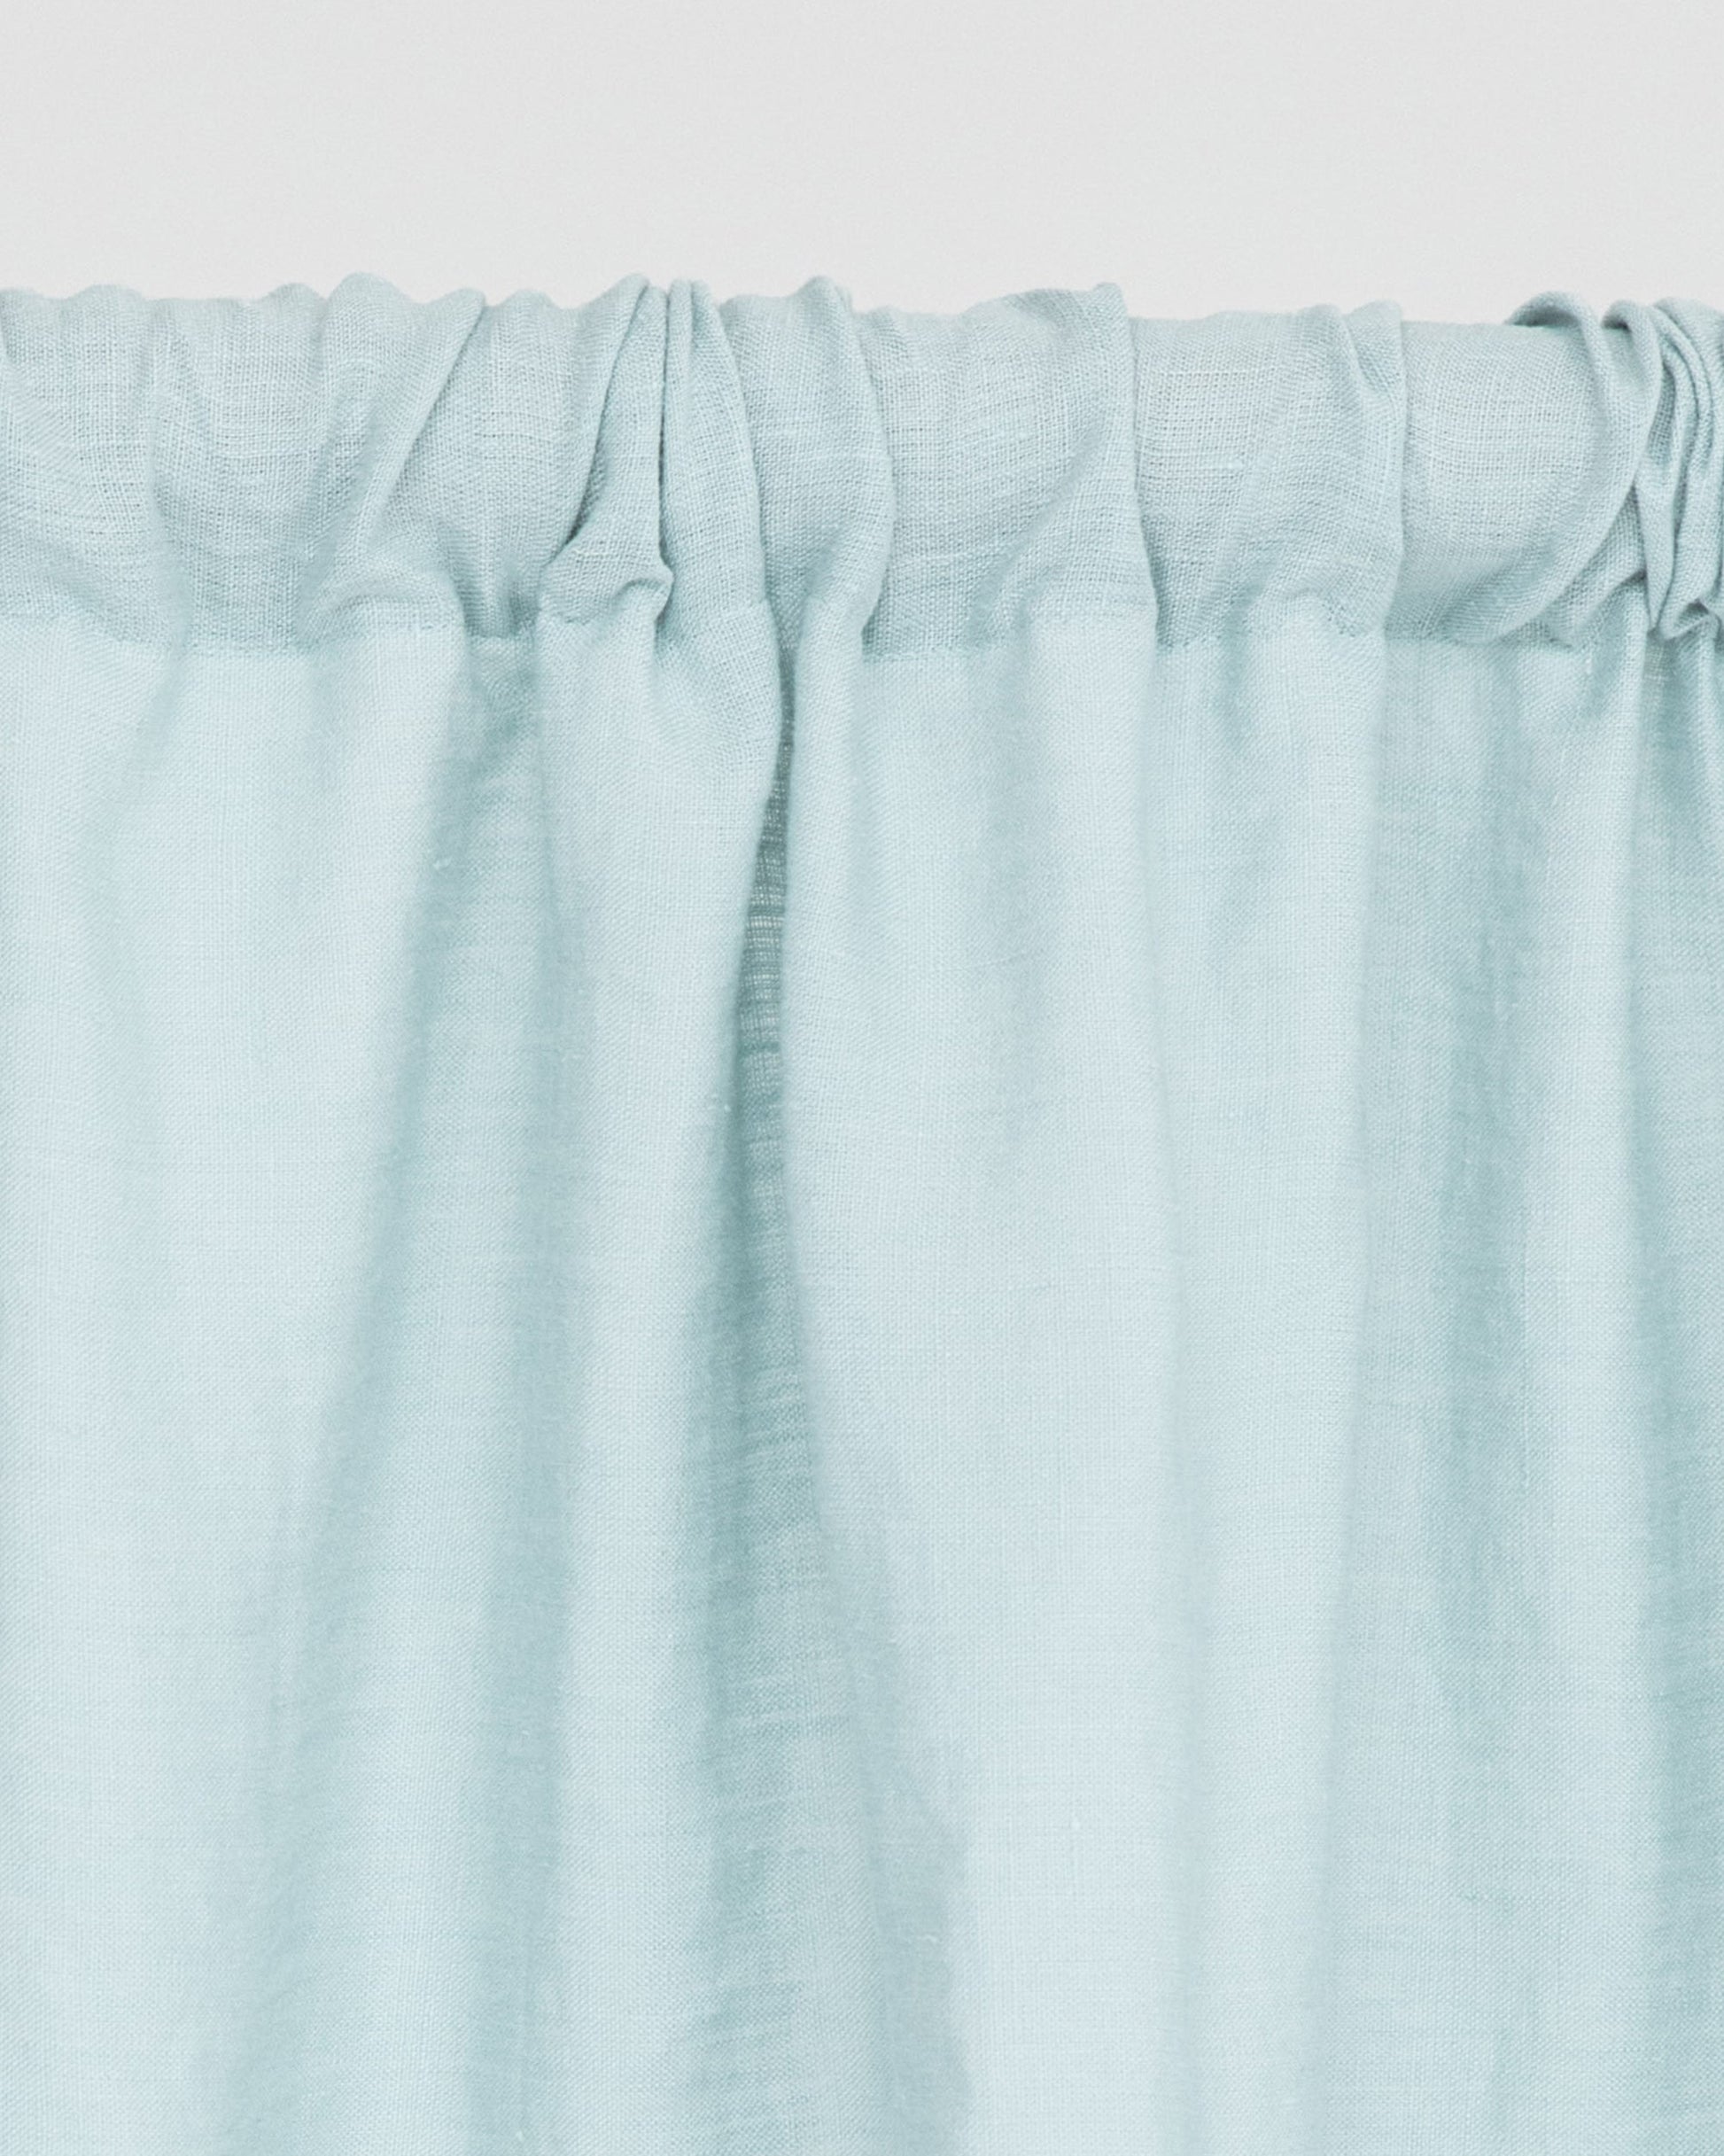 Rod pocket linen curtain panel (1 pcs) in Dusty blue - MagicLinen